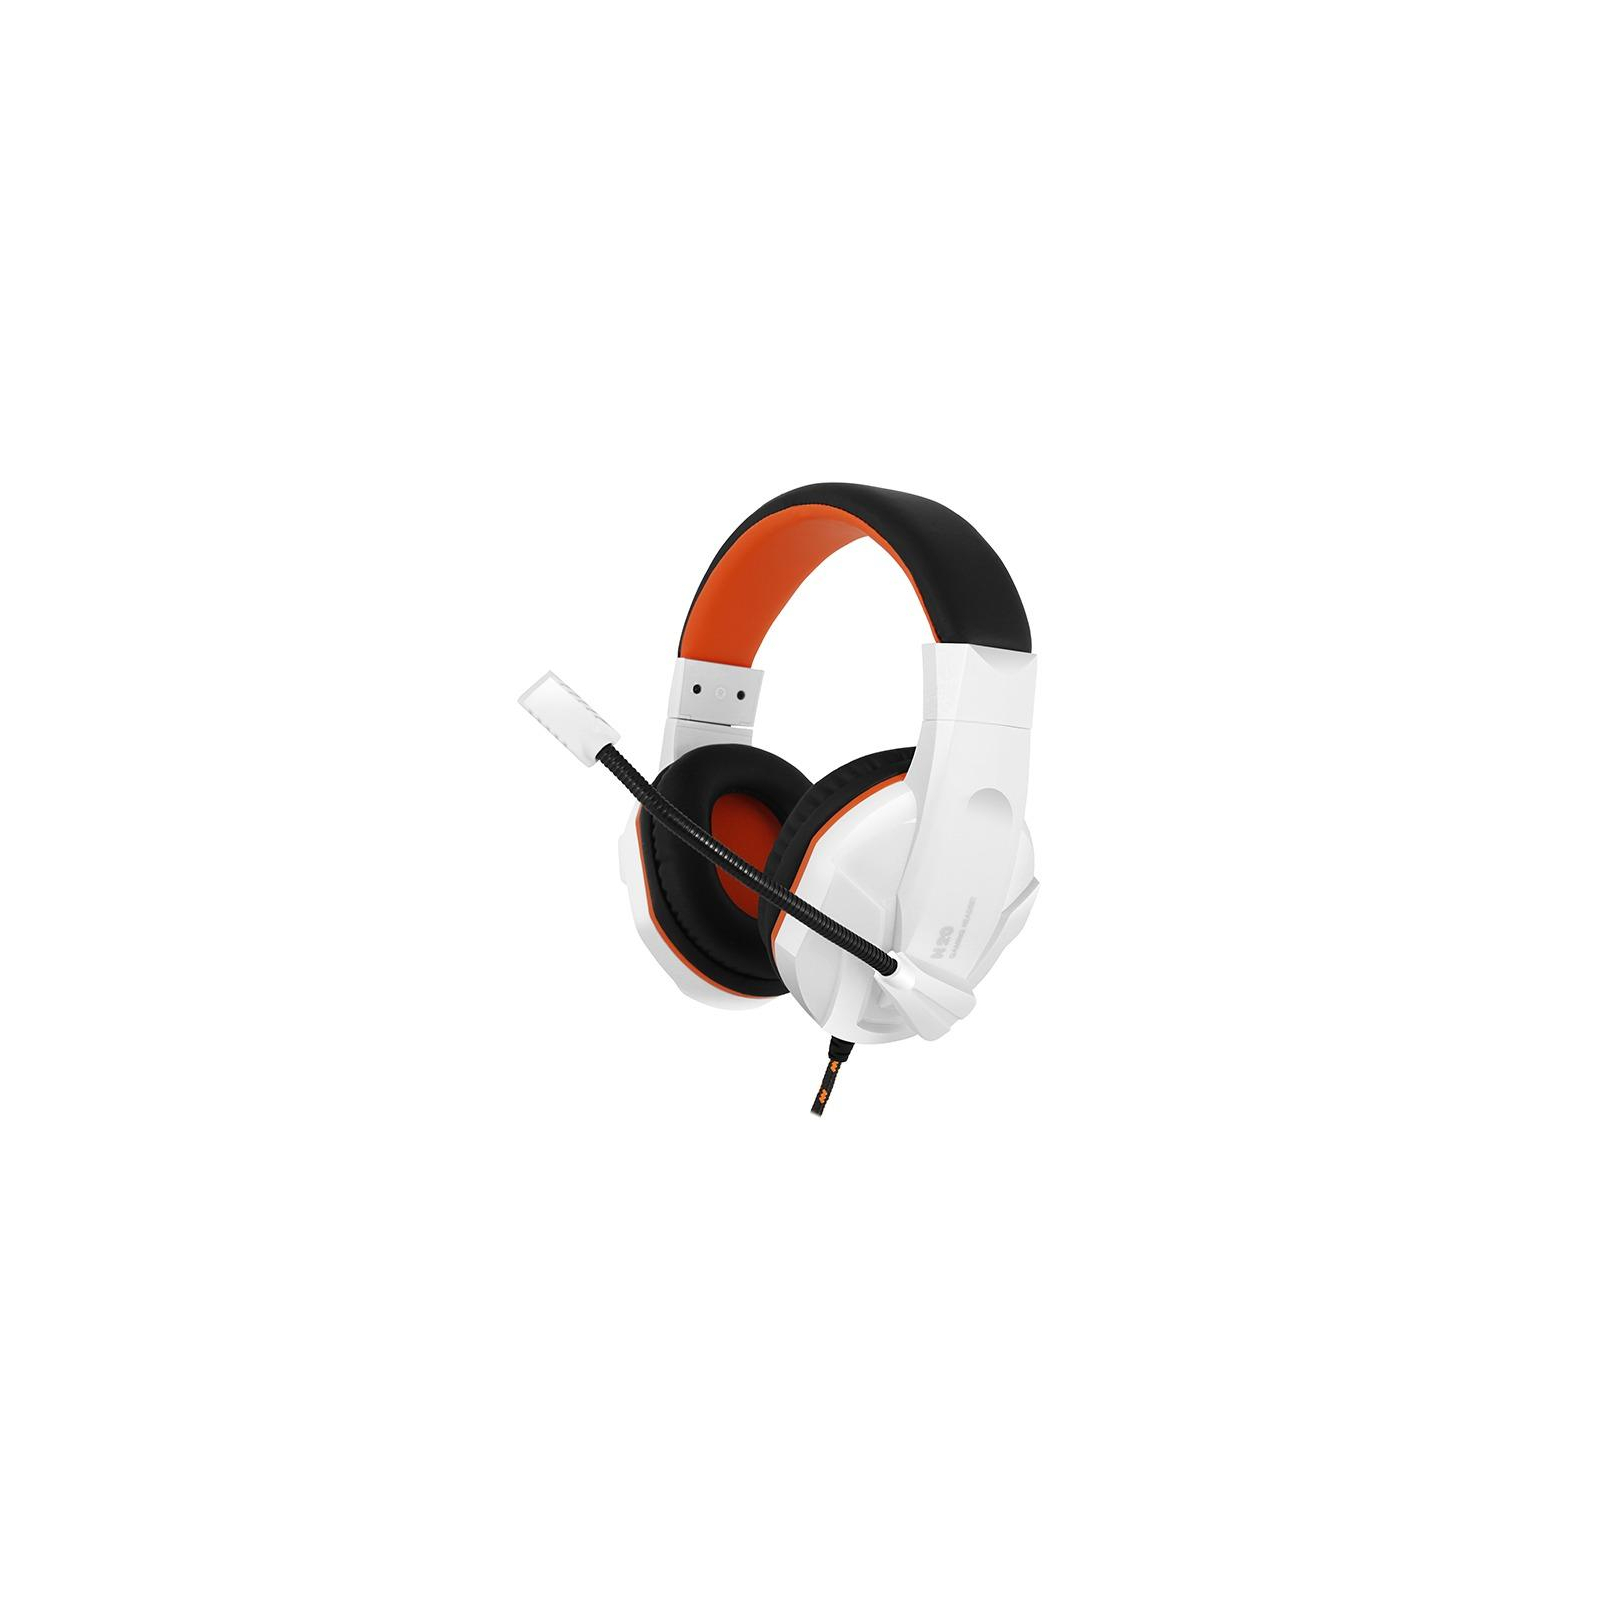 Наушники Gemix N20 White-Black-Orange Gaming